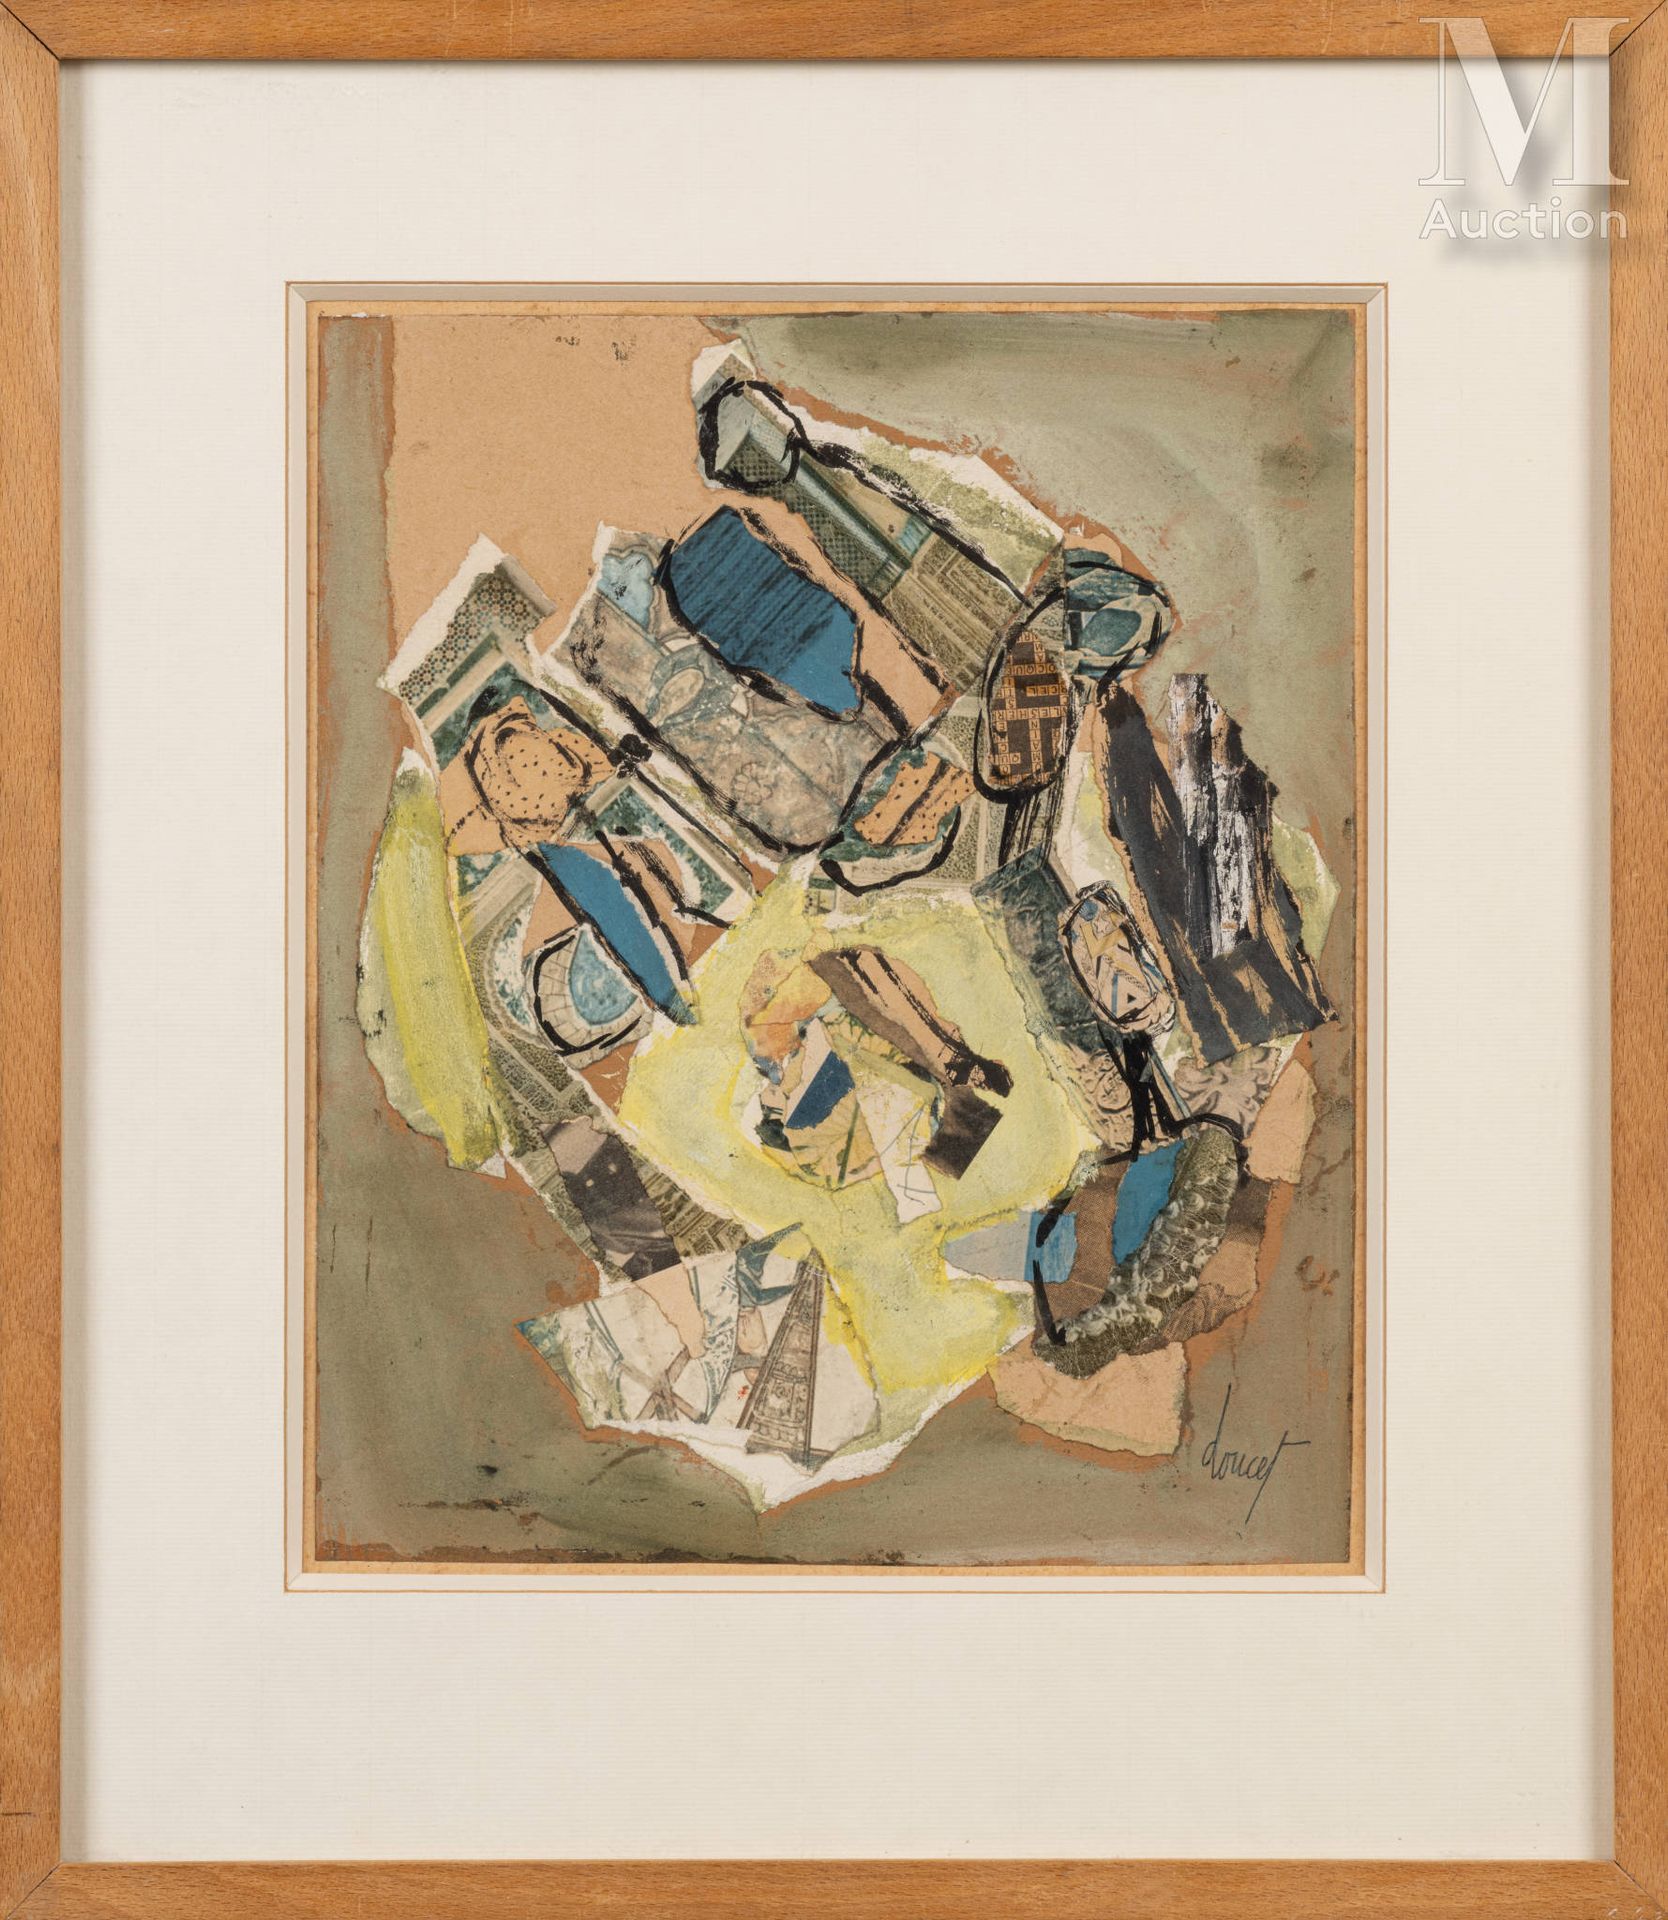 Jacques DOUCET (1924-1994) 无题》，1958年

纸上水墨和拼贴画，右下角签名

30 x 25厘米



出处 :

冯罗埃画廊

&hellip;